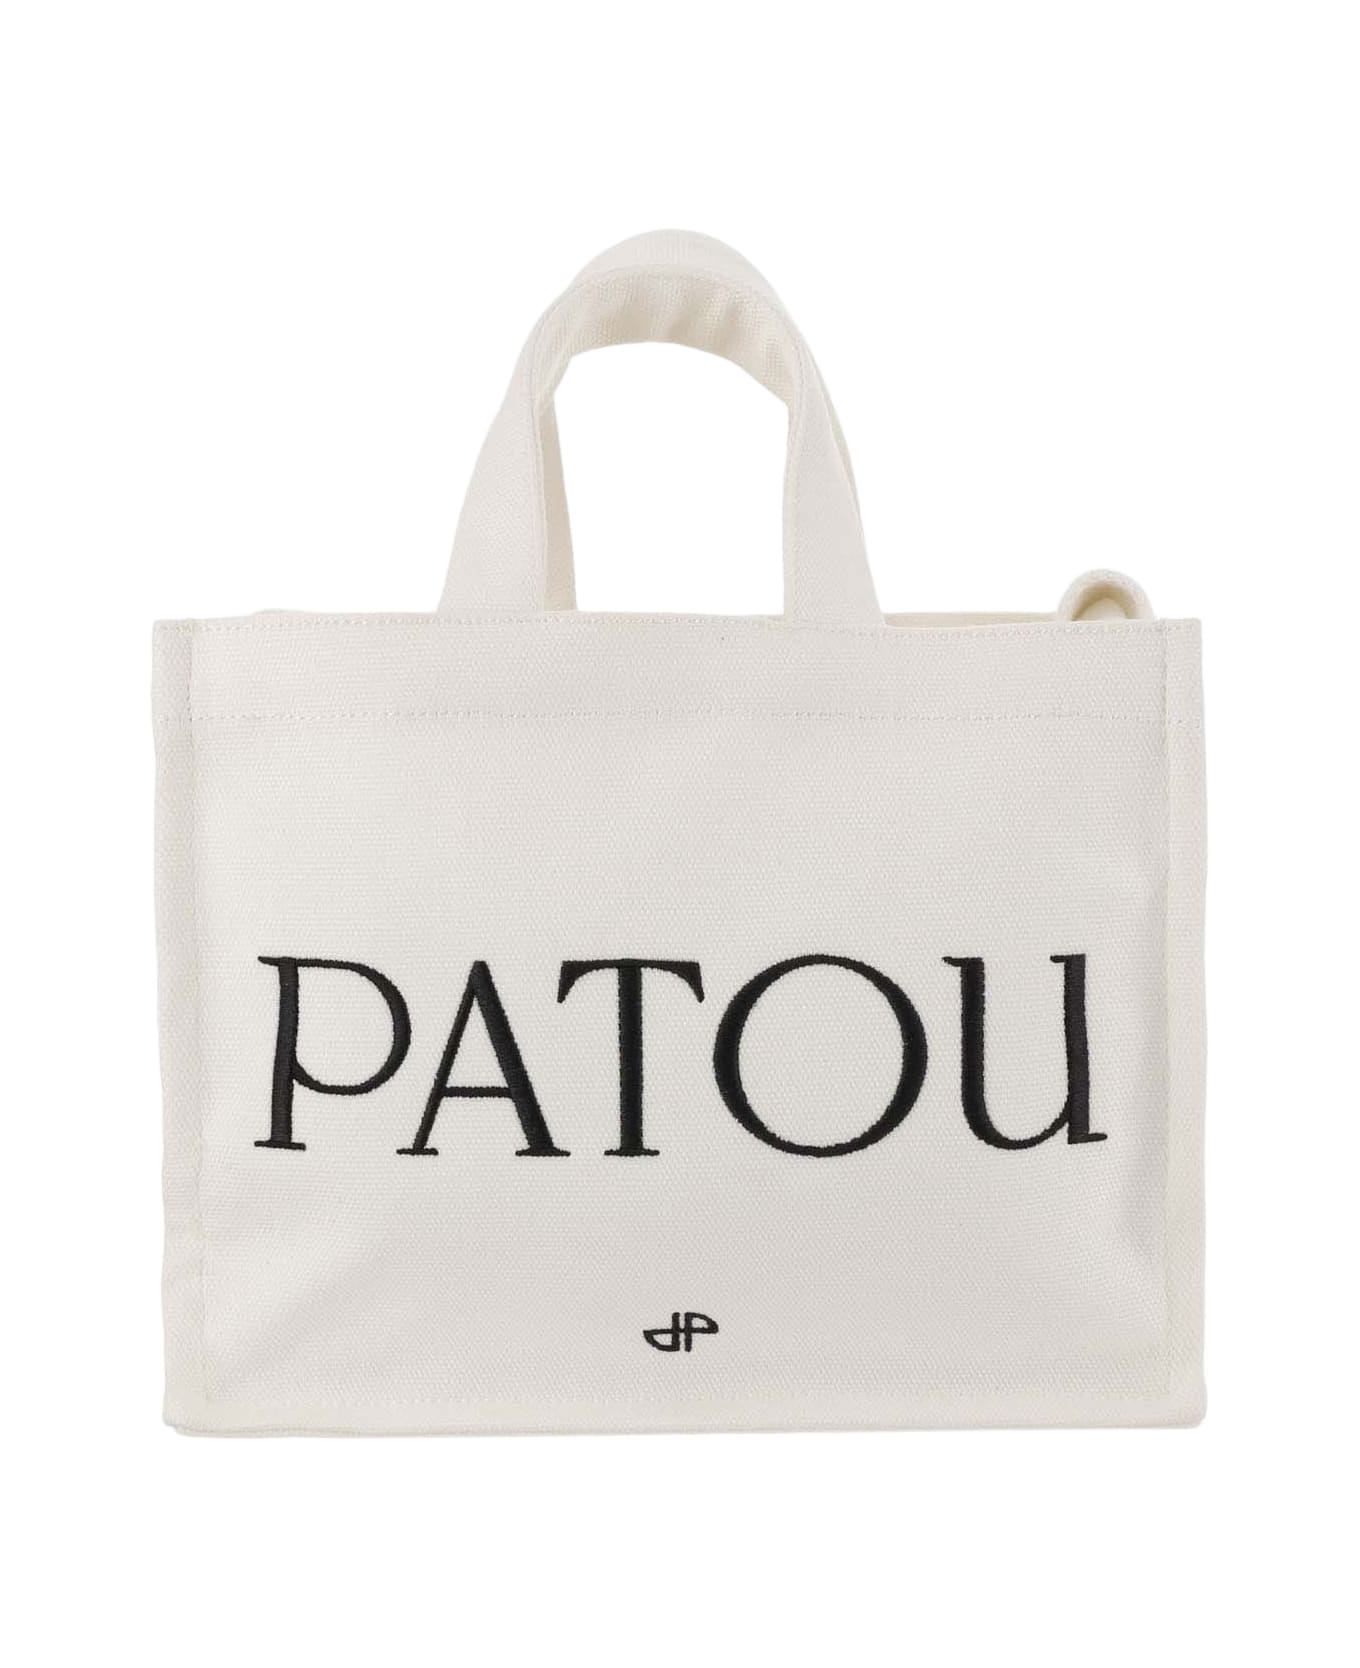 Patou Cotton Tote Bag - White